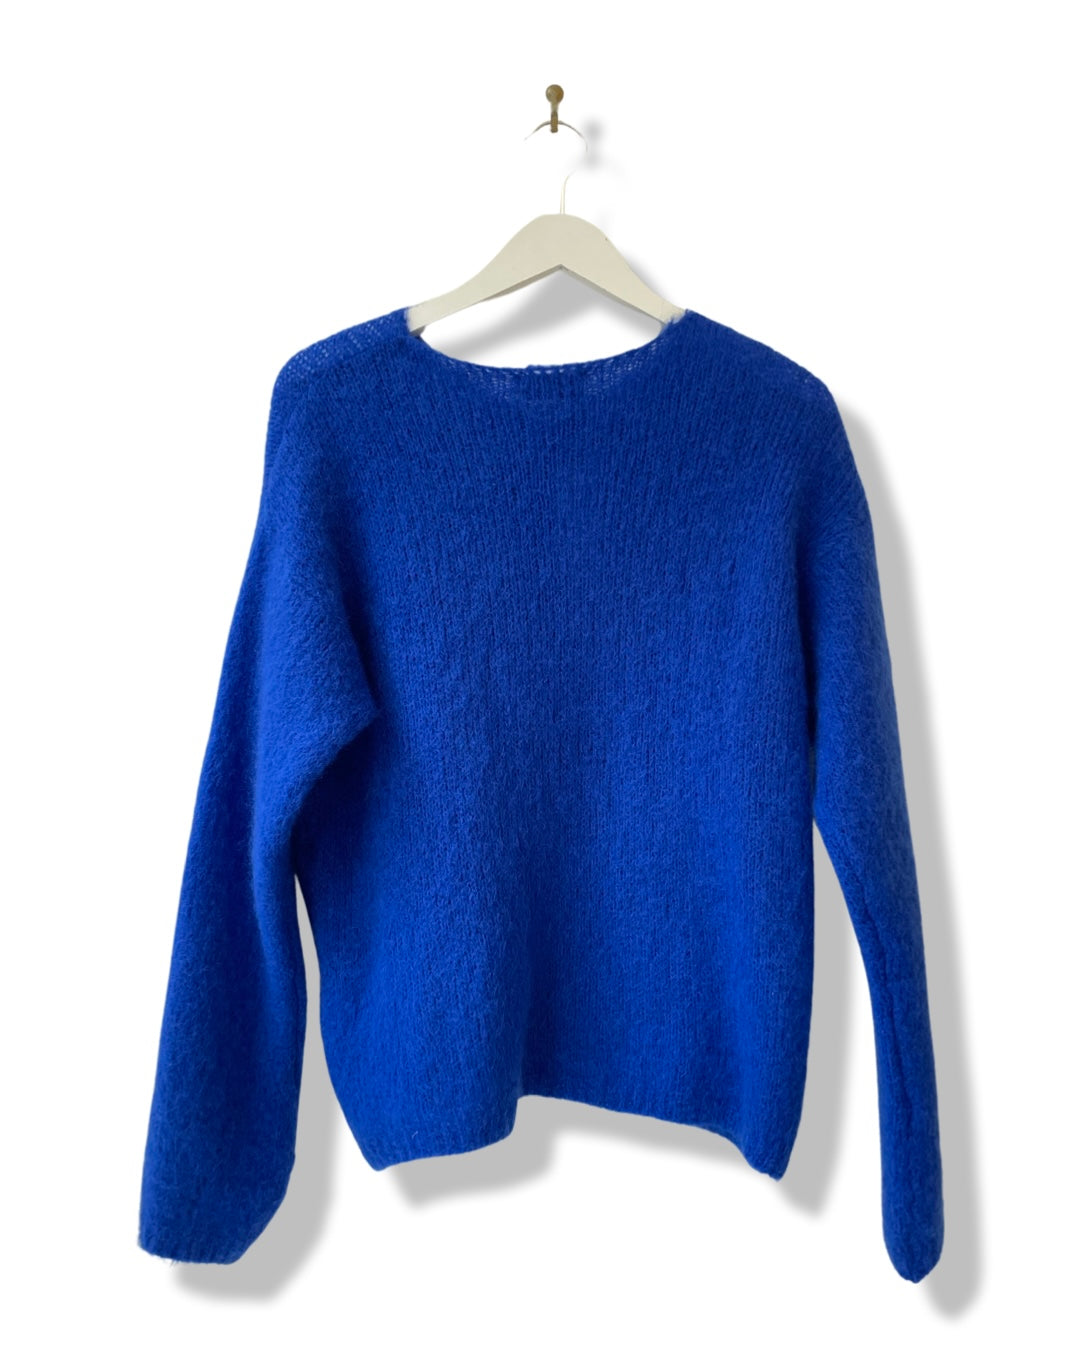 Royal blue soft sweater.